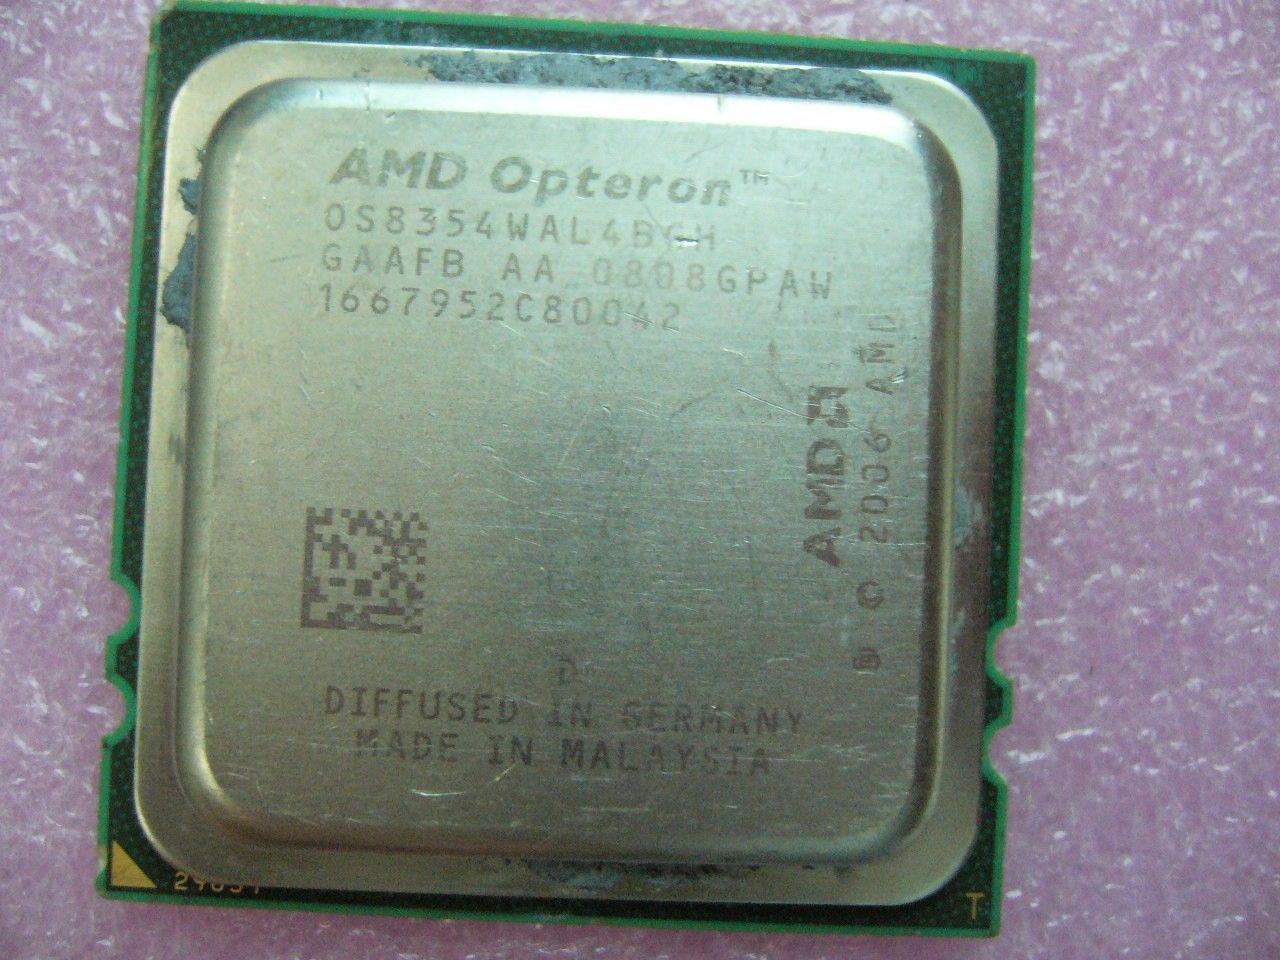 QTY 1x AMD OS8354WAL4BGH Quad CORE OPTERON 8354 Socket F 1207